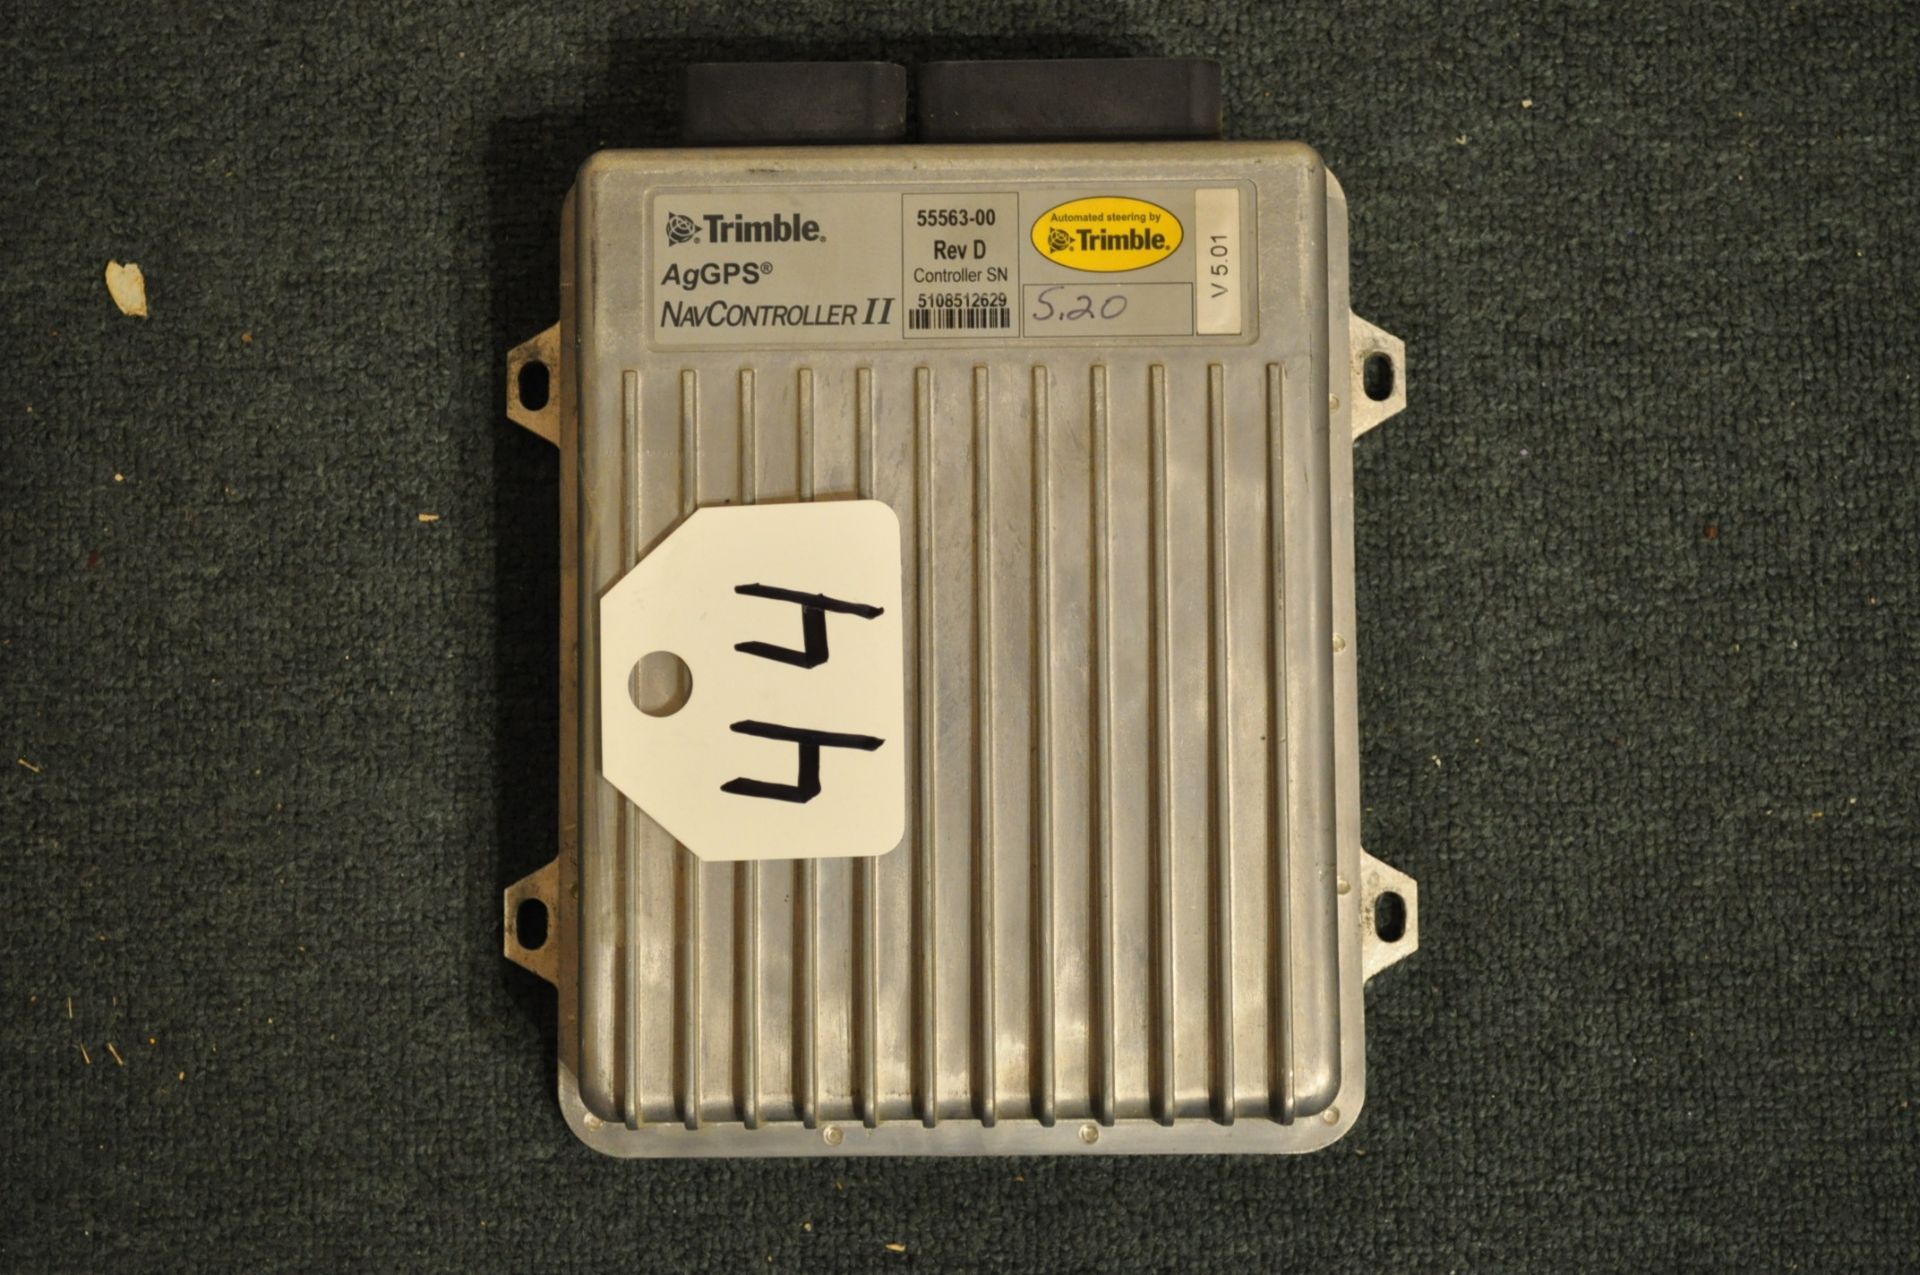 Trimble NAV II Controller with Case IH software, Rev D, Part # 55563-00, SN 5108512629